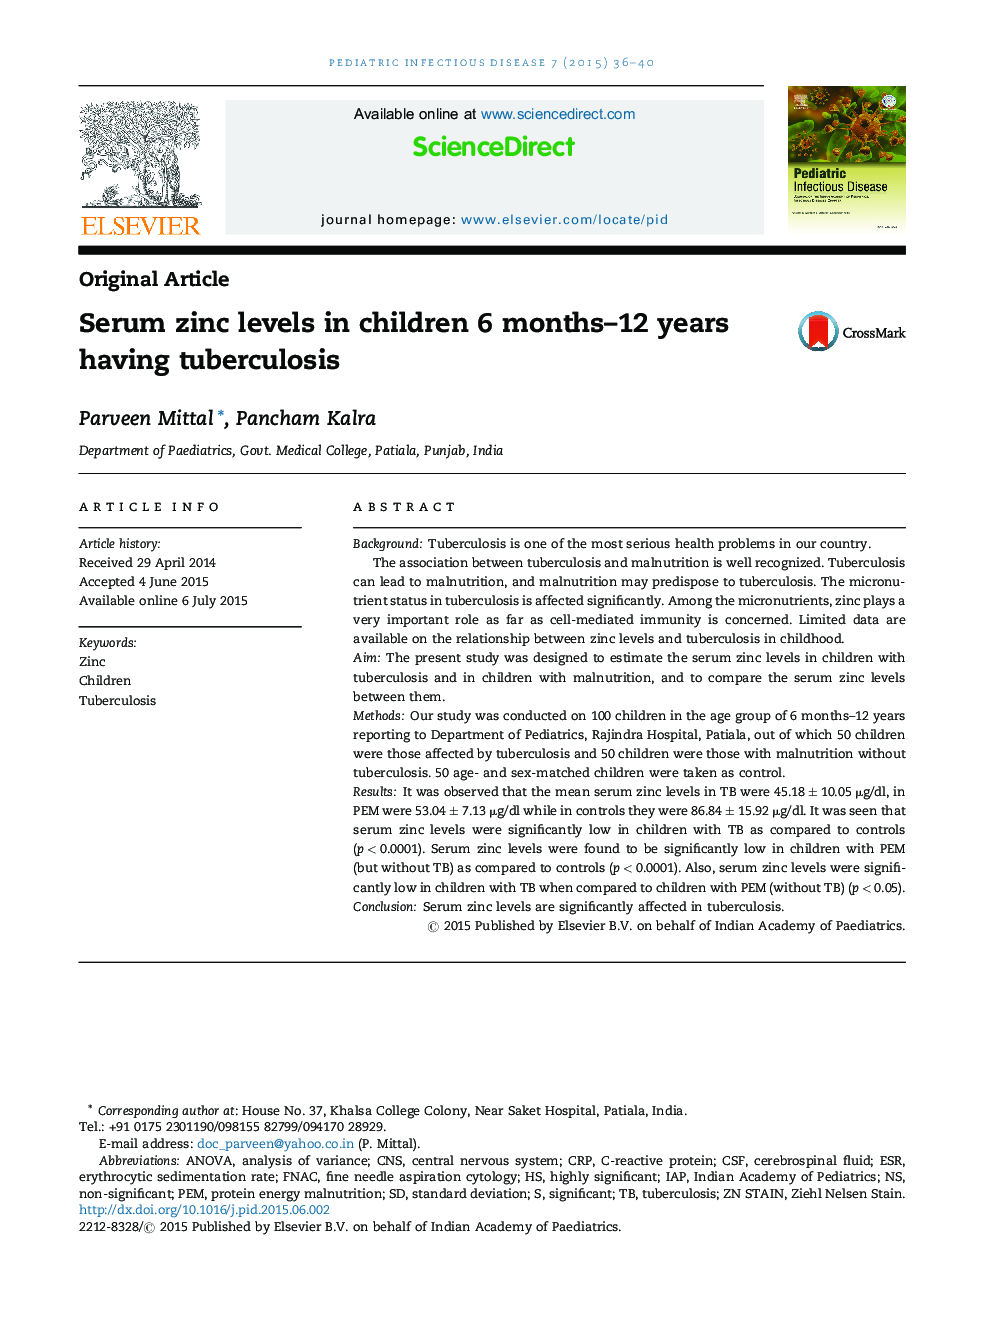 Serum zinc levels in children 6 months–12 years having tuberculosis